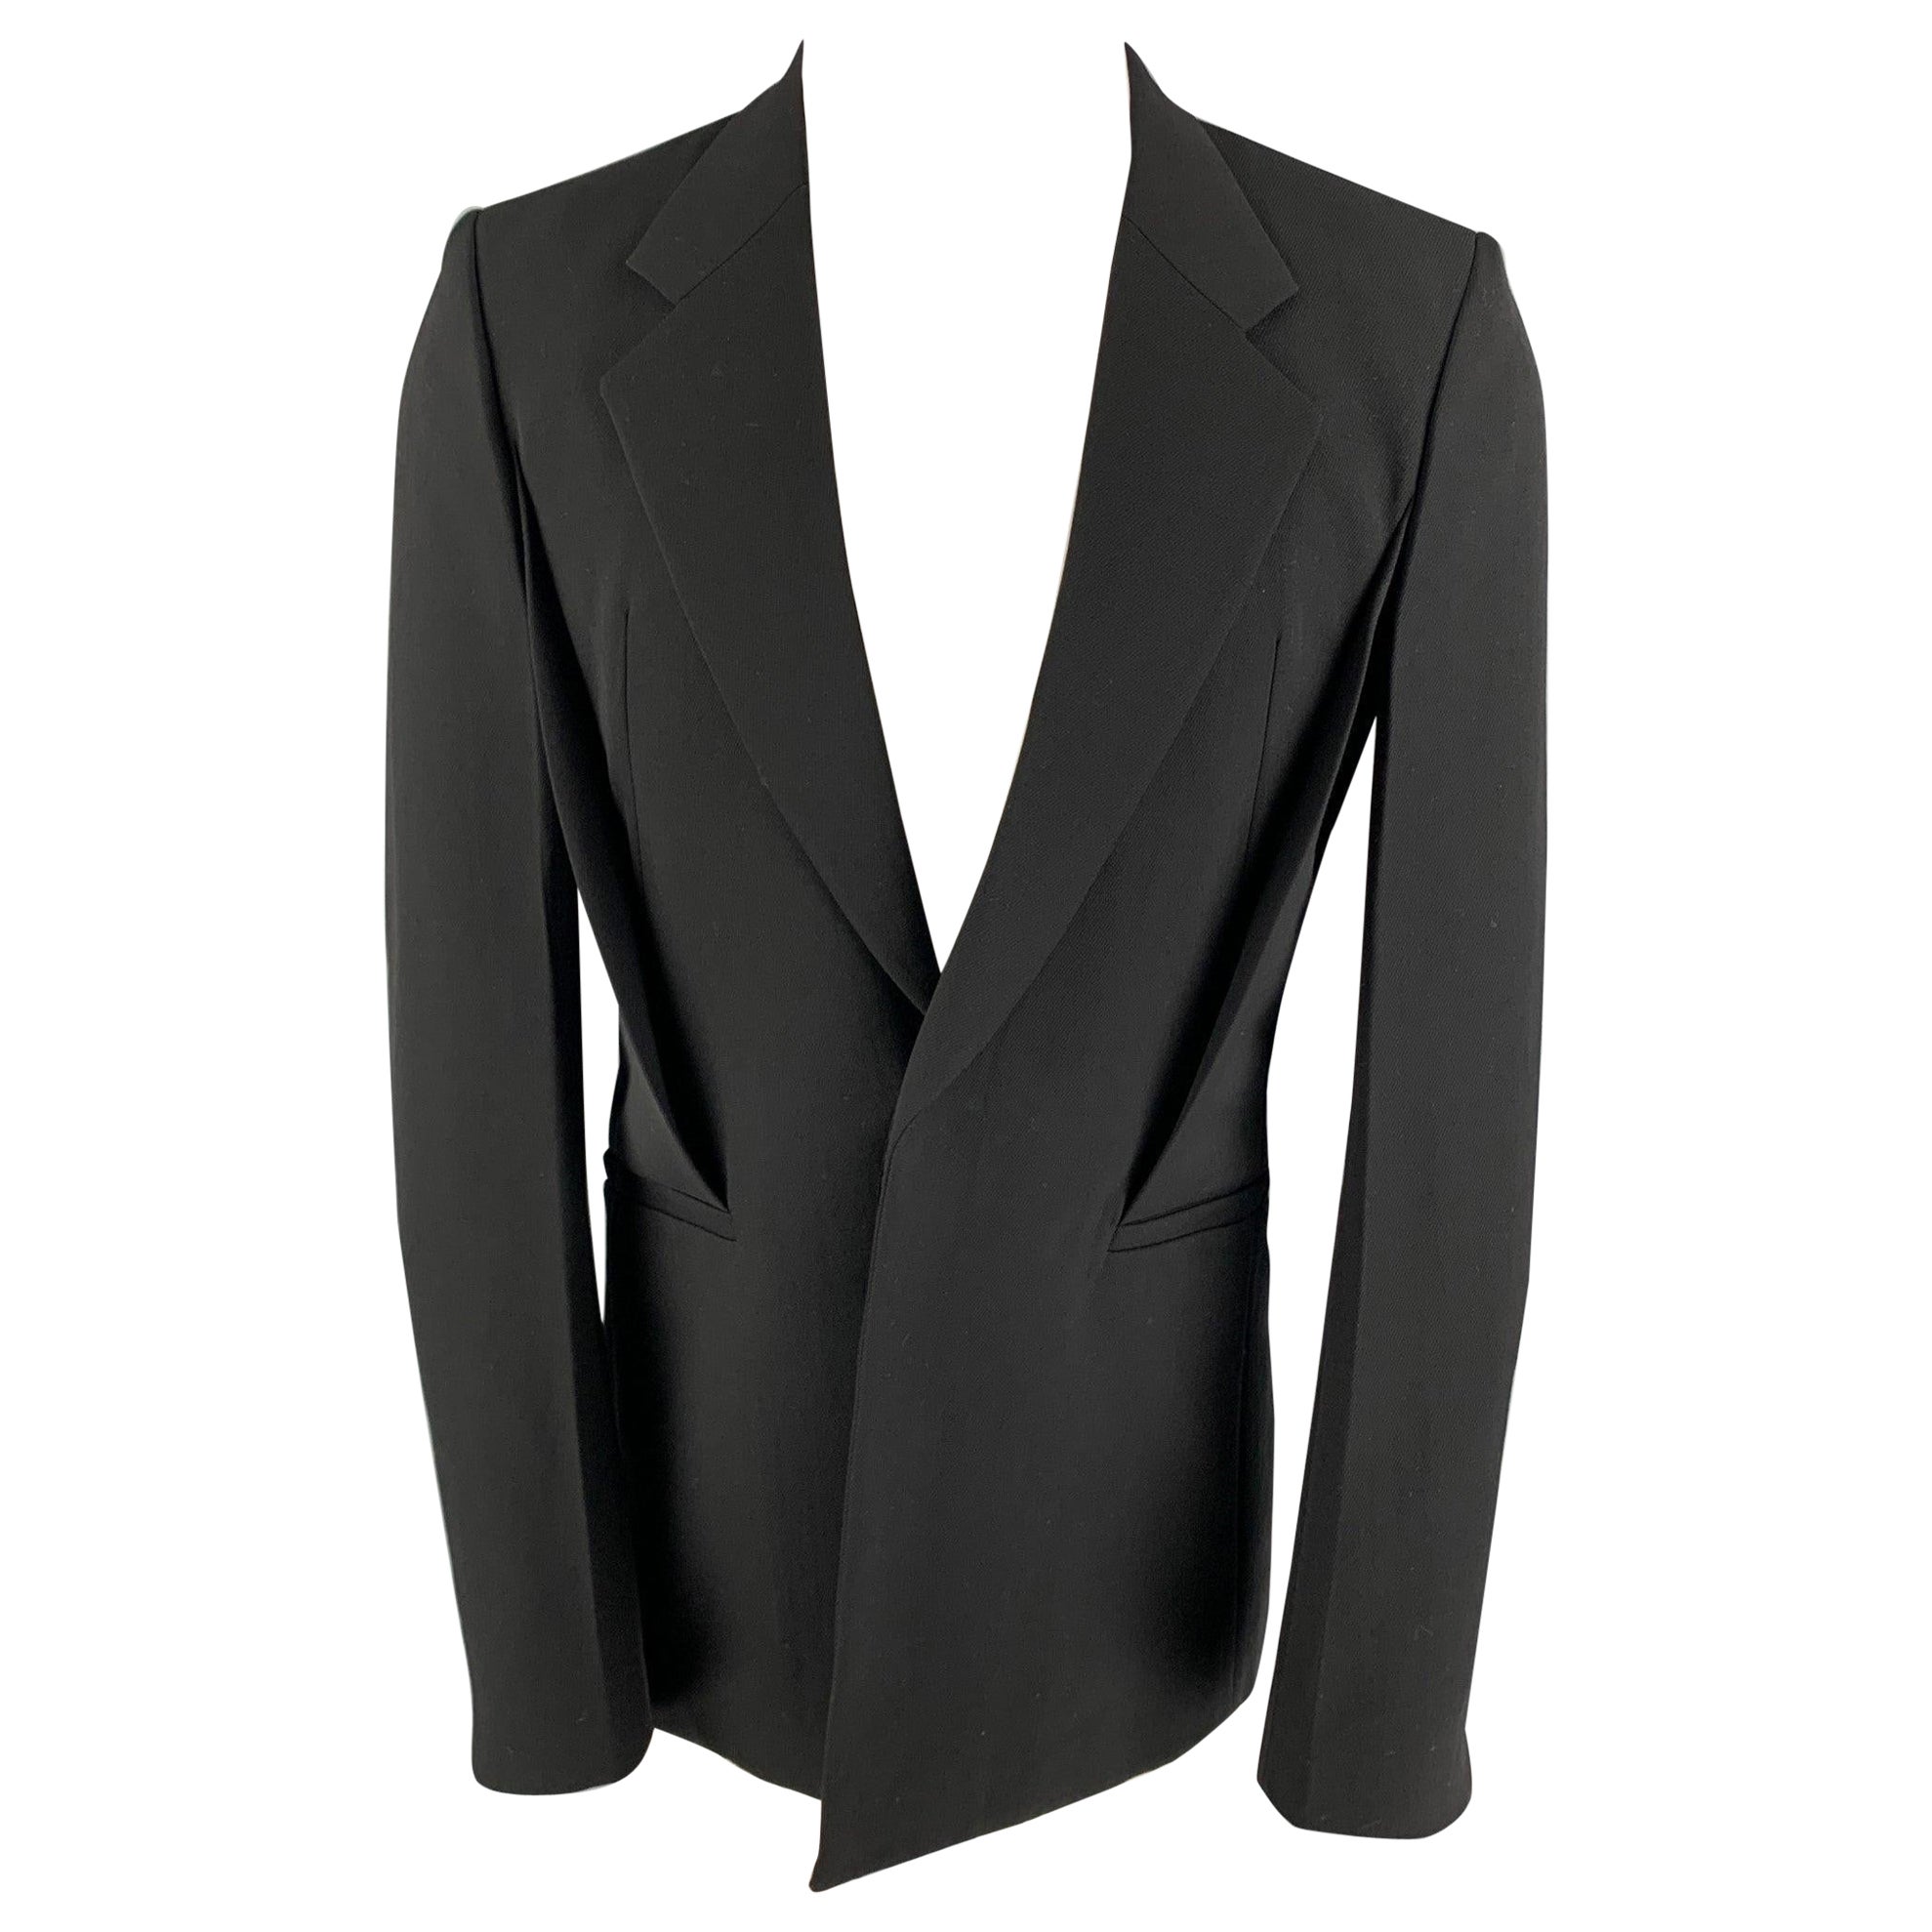 GIVENCHY Size 40 Black Notch Lapel Slim Fit Sport Coat For Sale